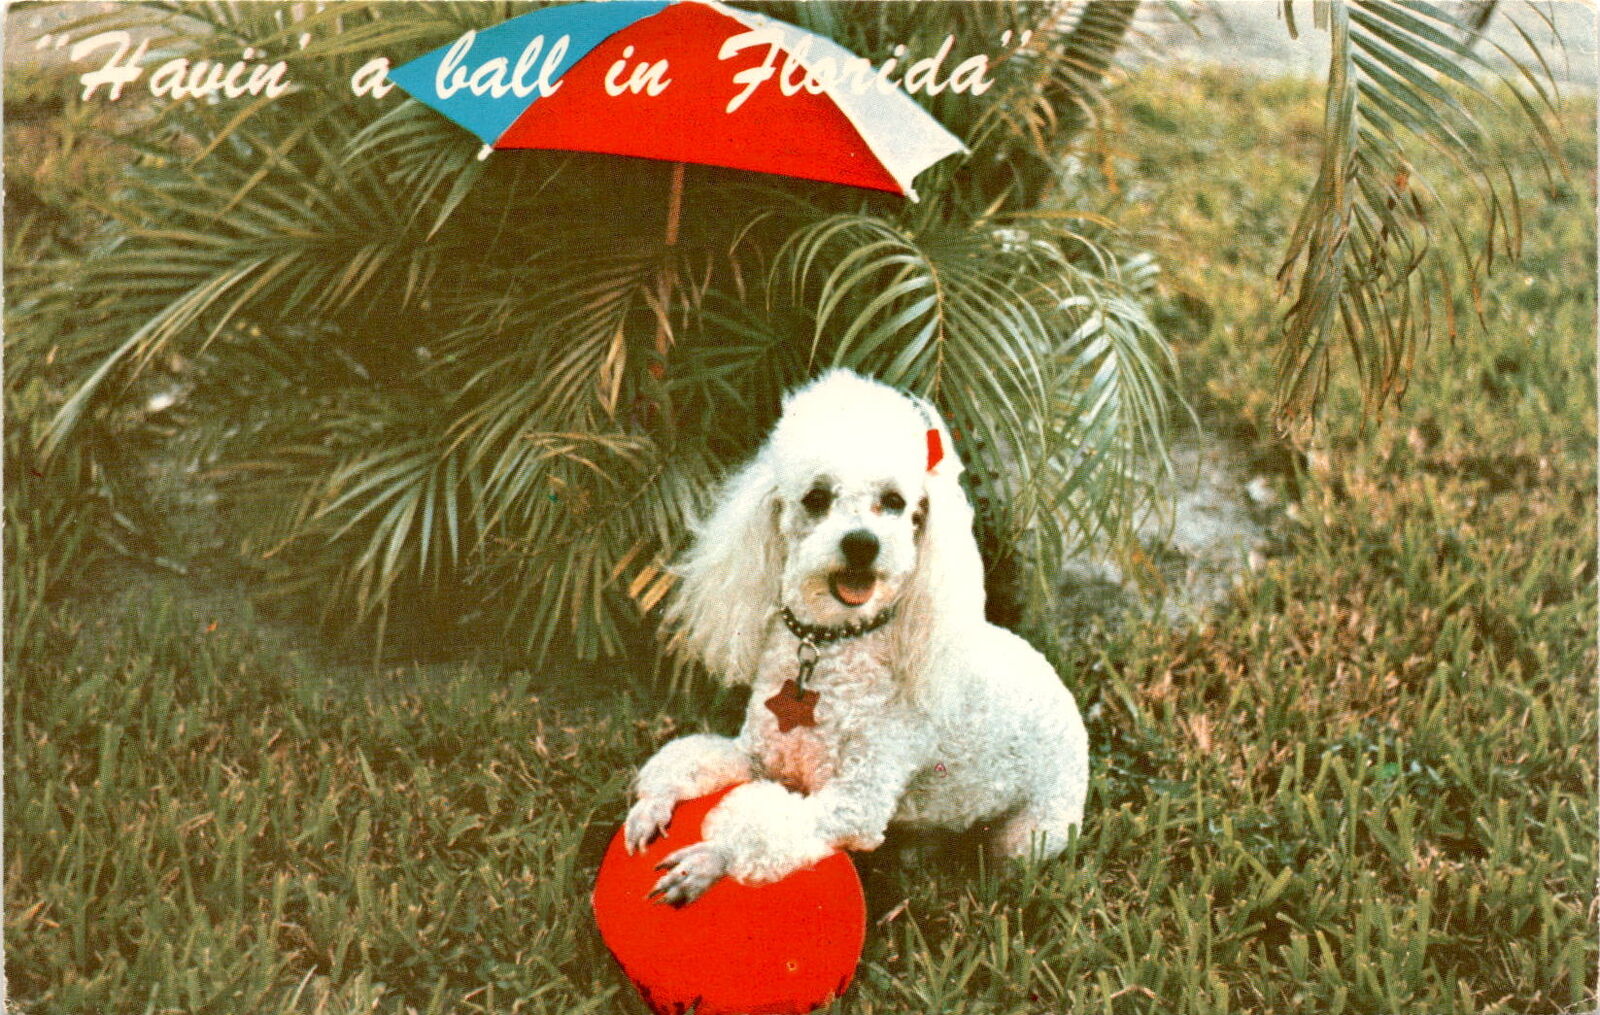 Jean, Adele Daves, Farida, Florida, poodles, pleasant weather Postcard